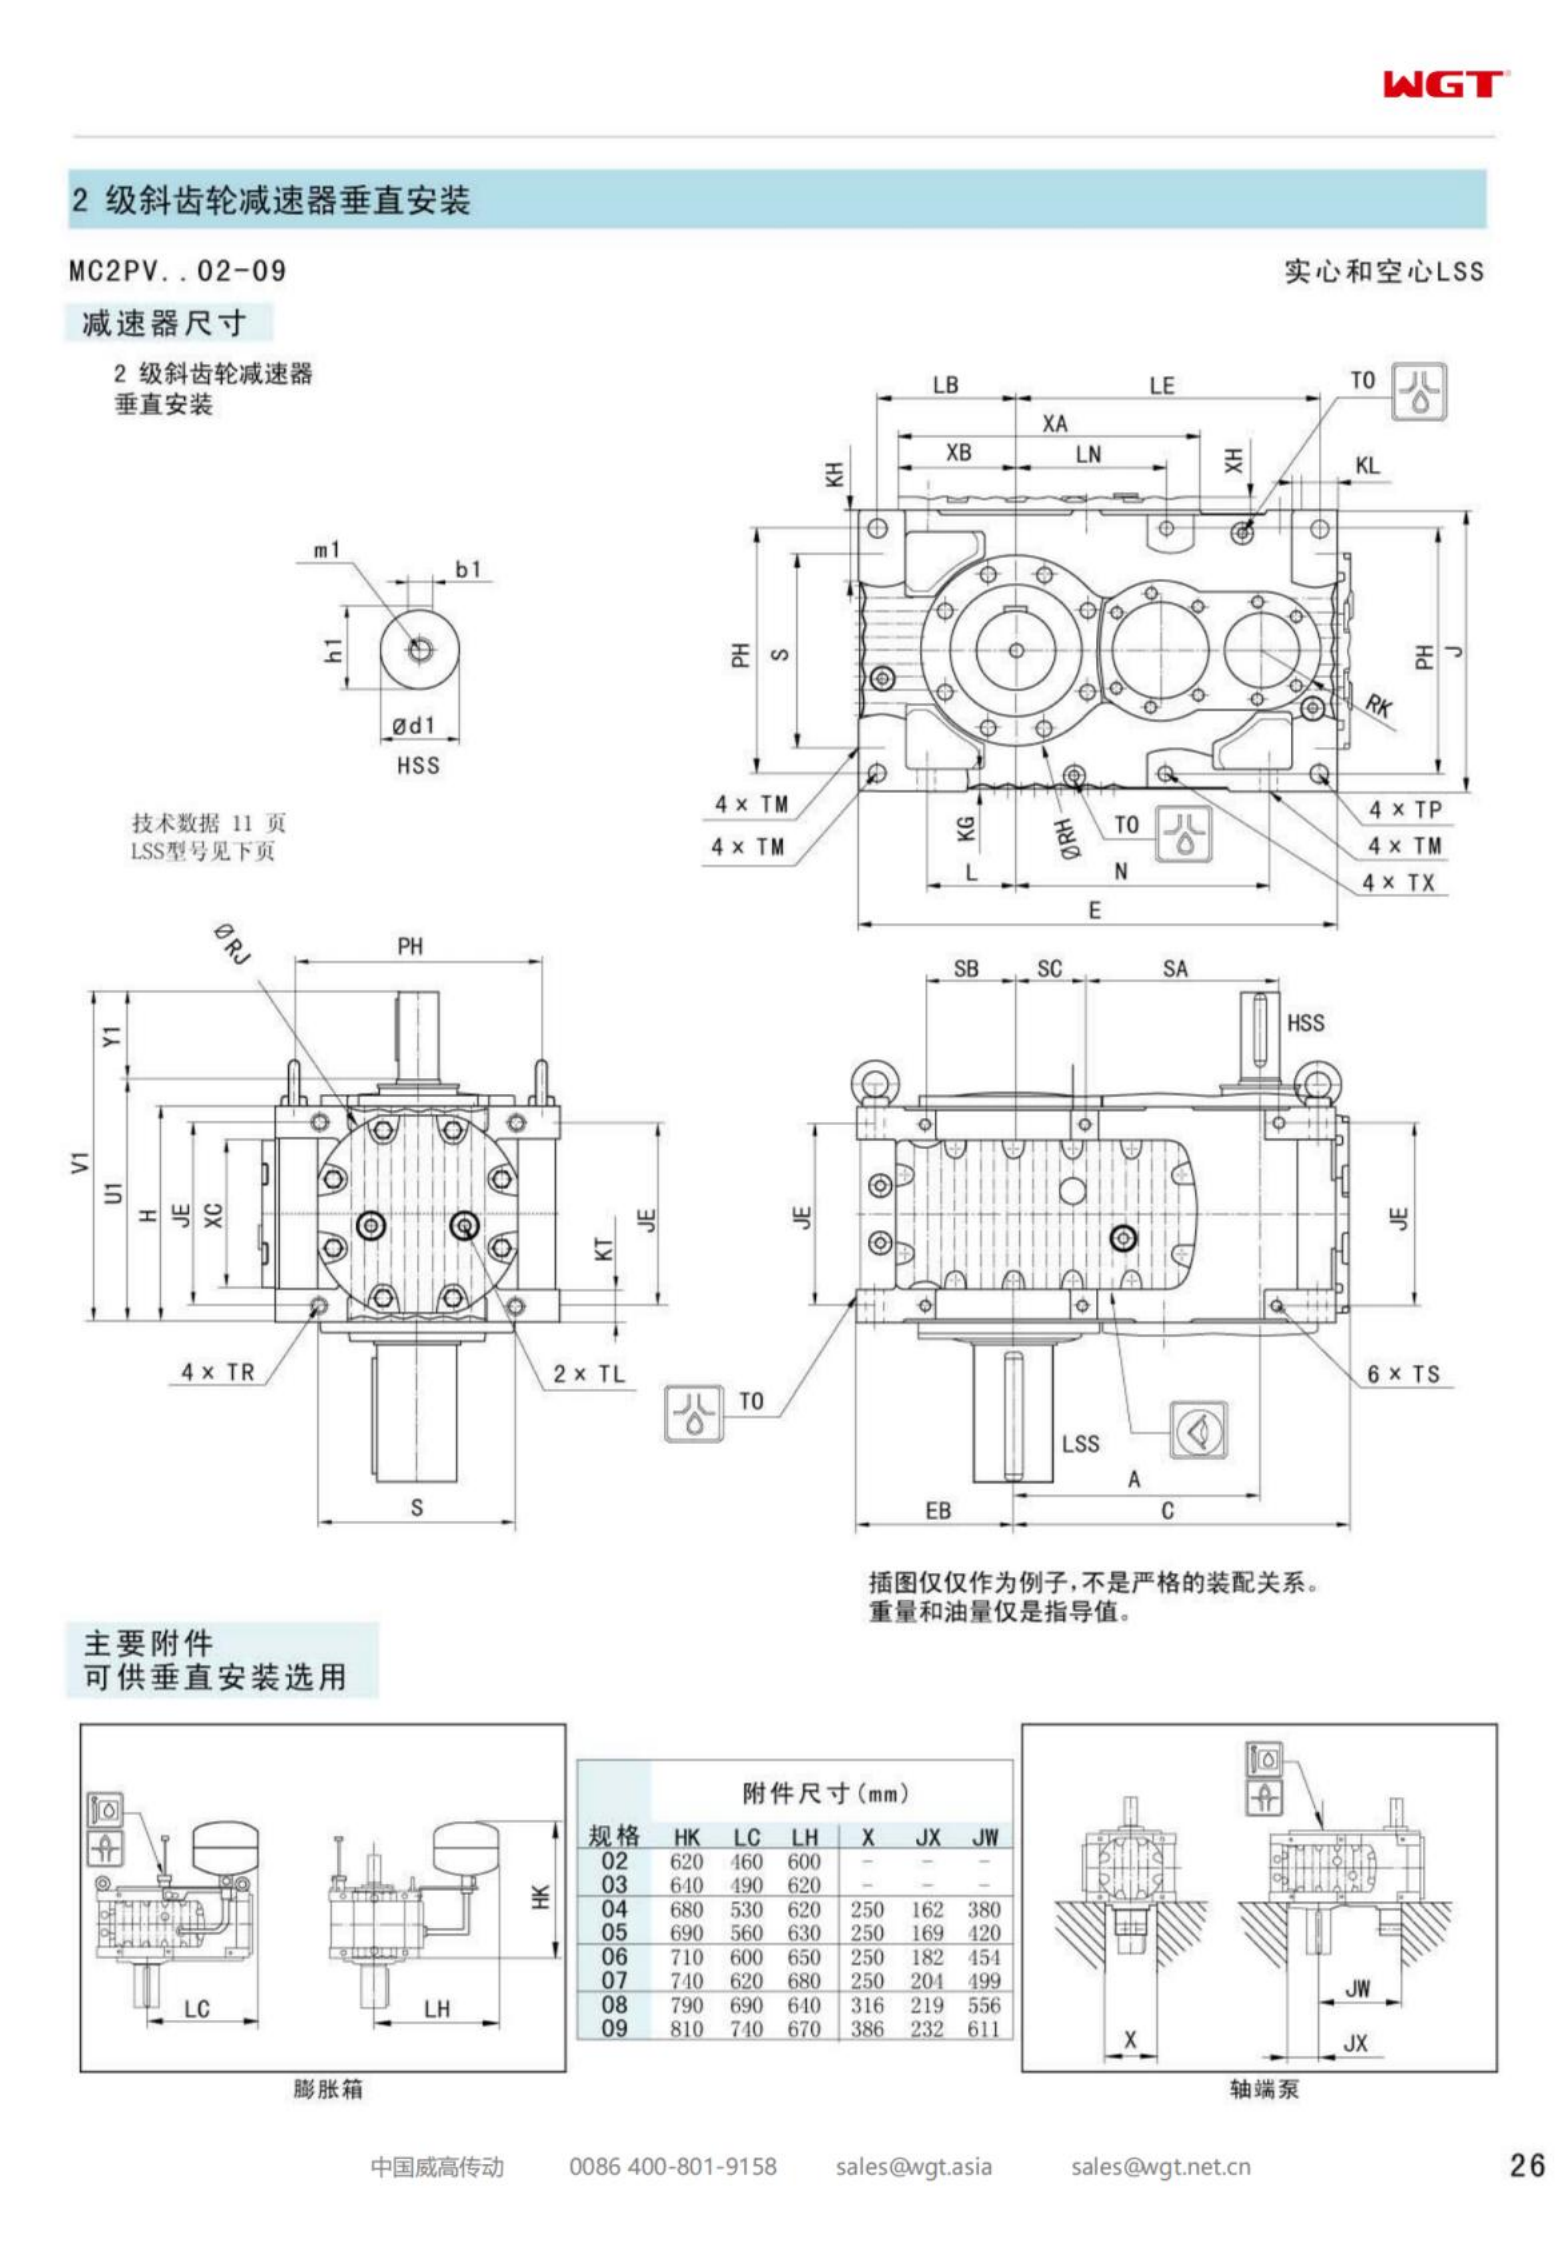 MC2PVHT05 replaces _SEW_MC_Series gearbox (patent)